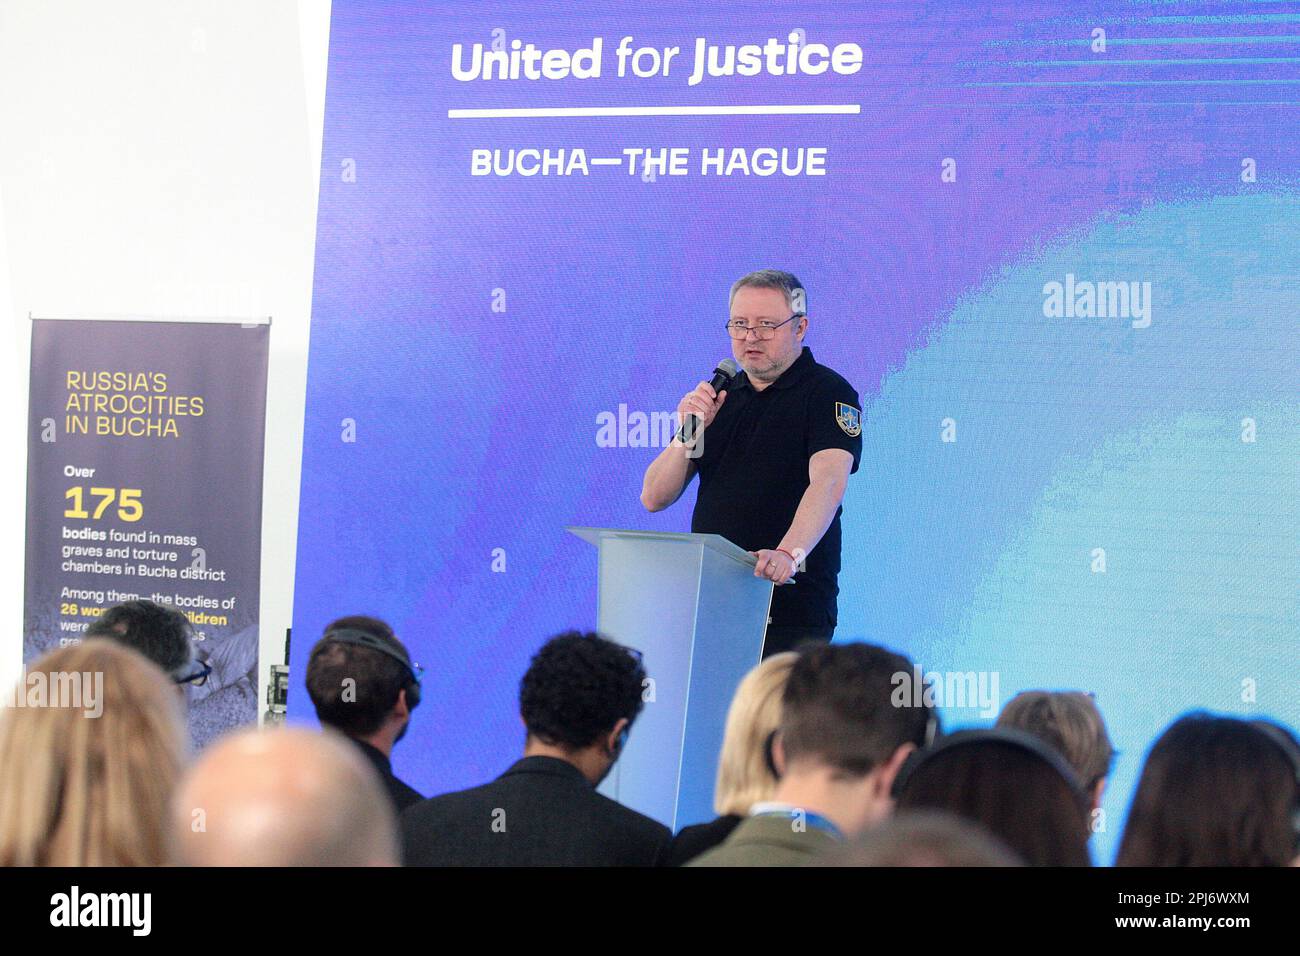 BUCHA, UKRAINE - MARCH 31, 2023 - Prosecutor General of Ukraine Andriy Kostin attends the United for Justice: Bucha - The Hague International Conferen Stock Photo